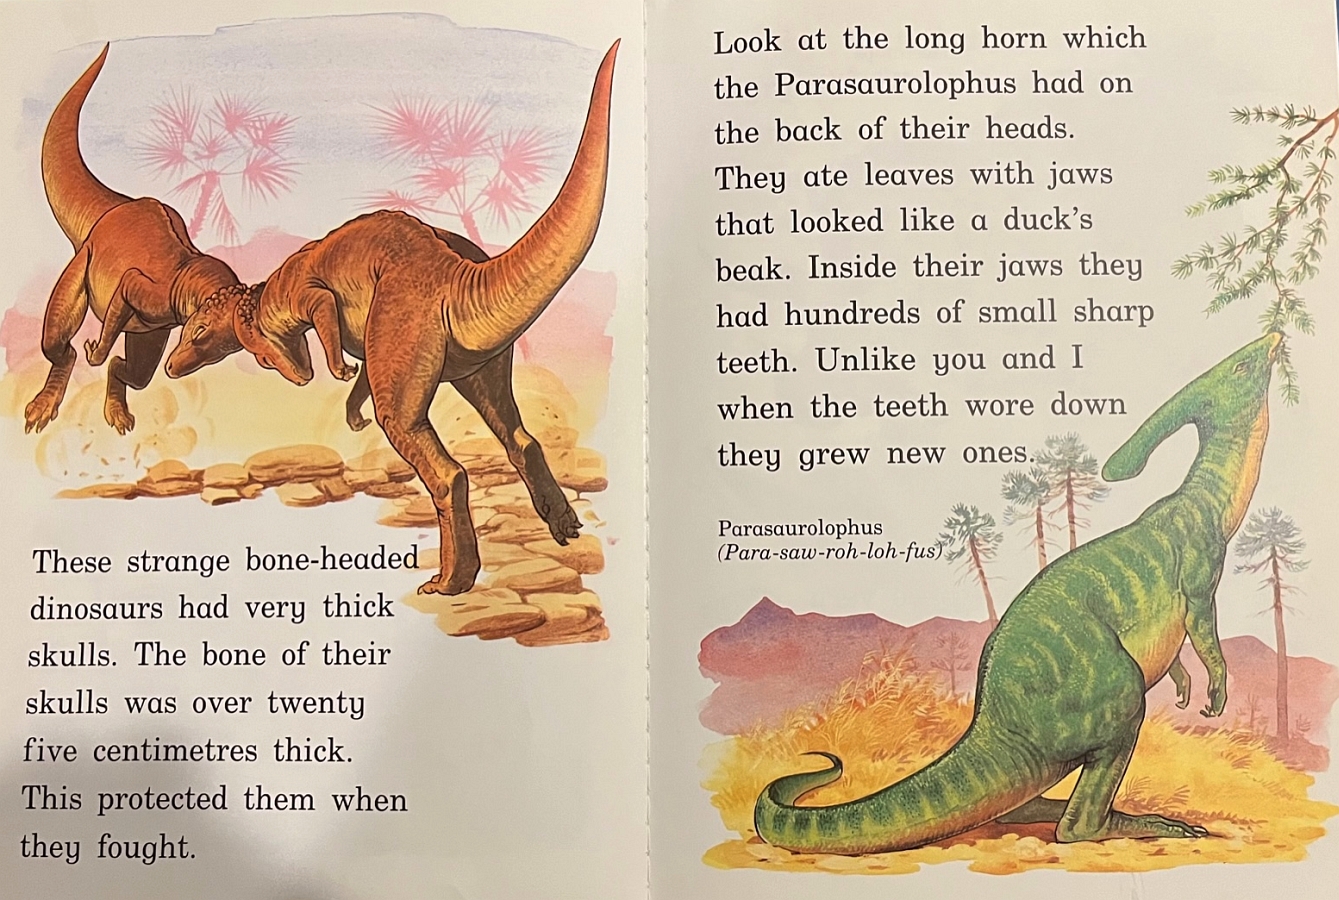 Pachycephalosaurus and Parasaurolophus by Bob Hersey